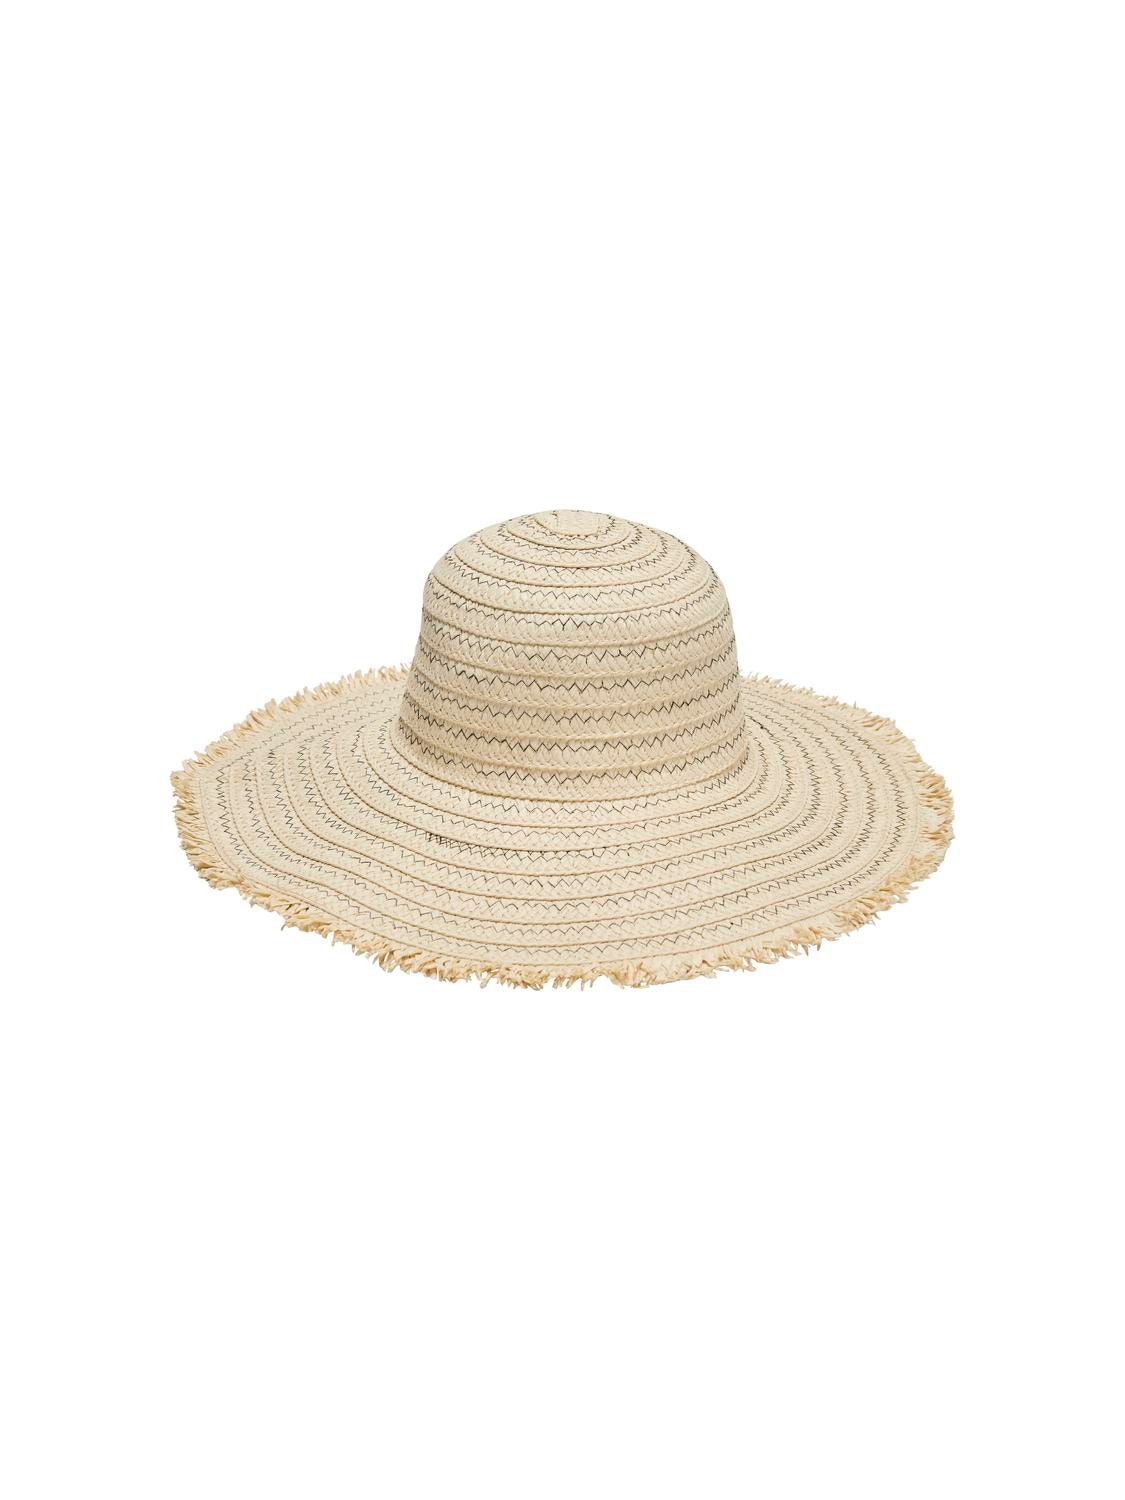 ONLY Straw sun hat -Pale Khaki - 15313312